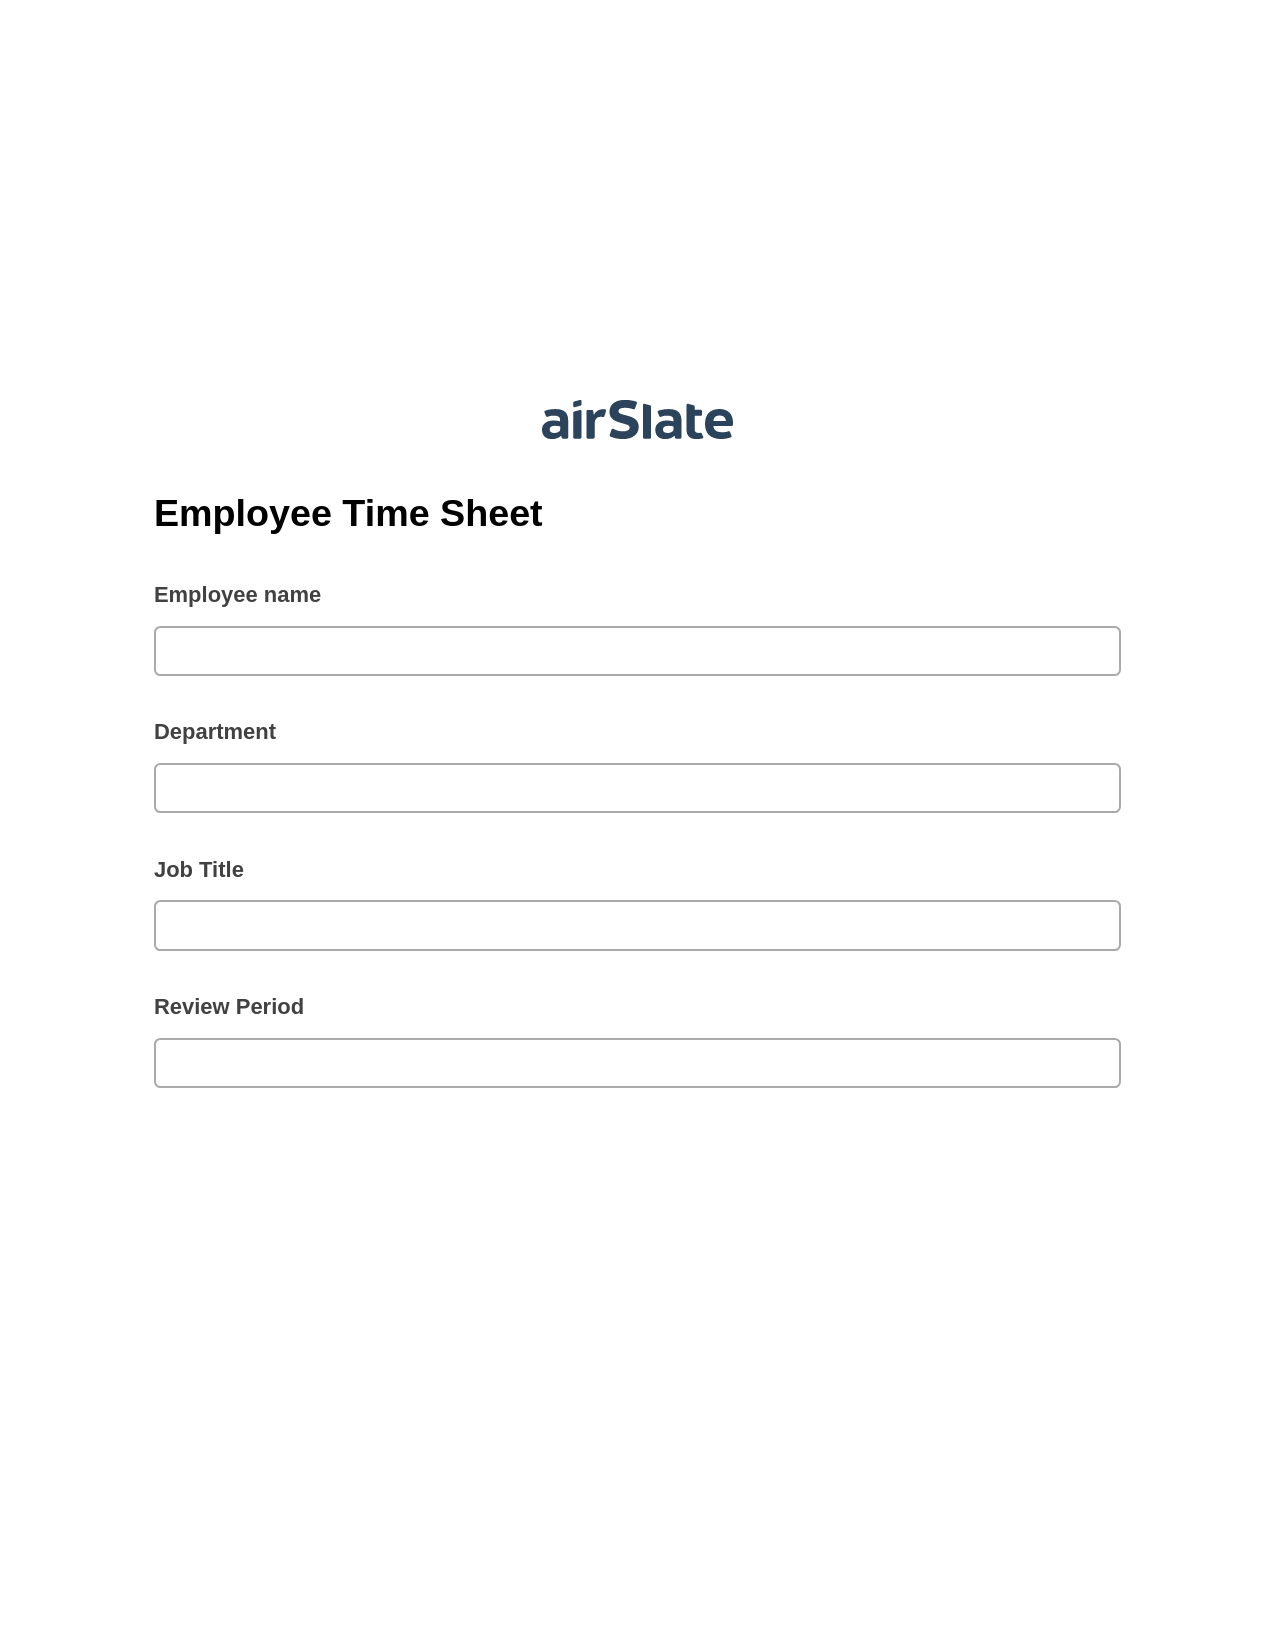 Employee Time Sheet Pre-fill from Excel Spreadsheet Bot, Update Audit Trail Bot, Slack Notification Postfinish Bot